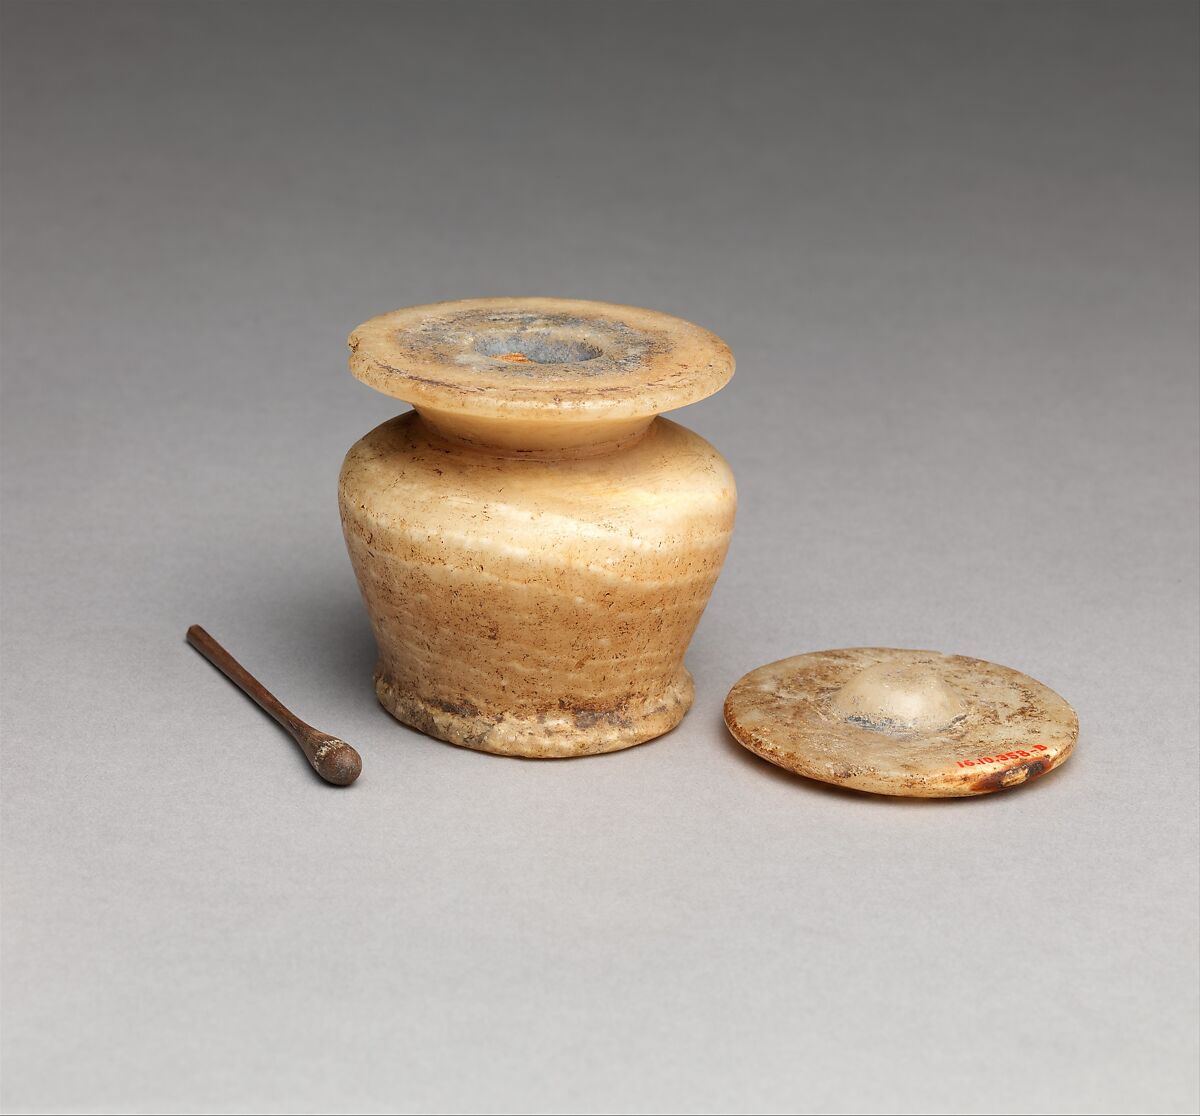 Kohl Jar and Stick, Travertine (Egyptian alabaster) 